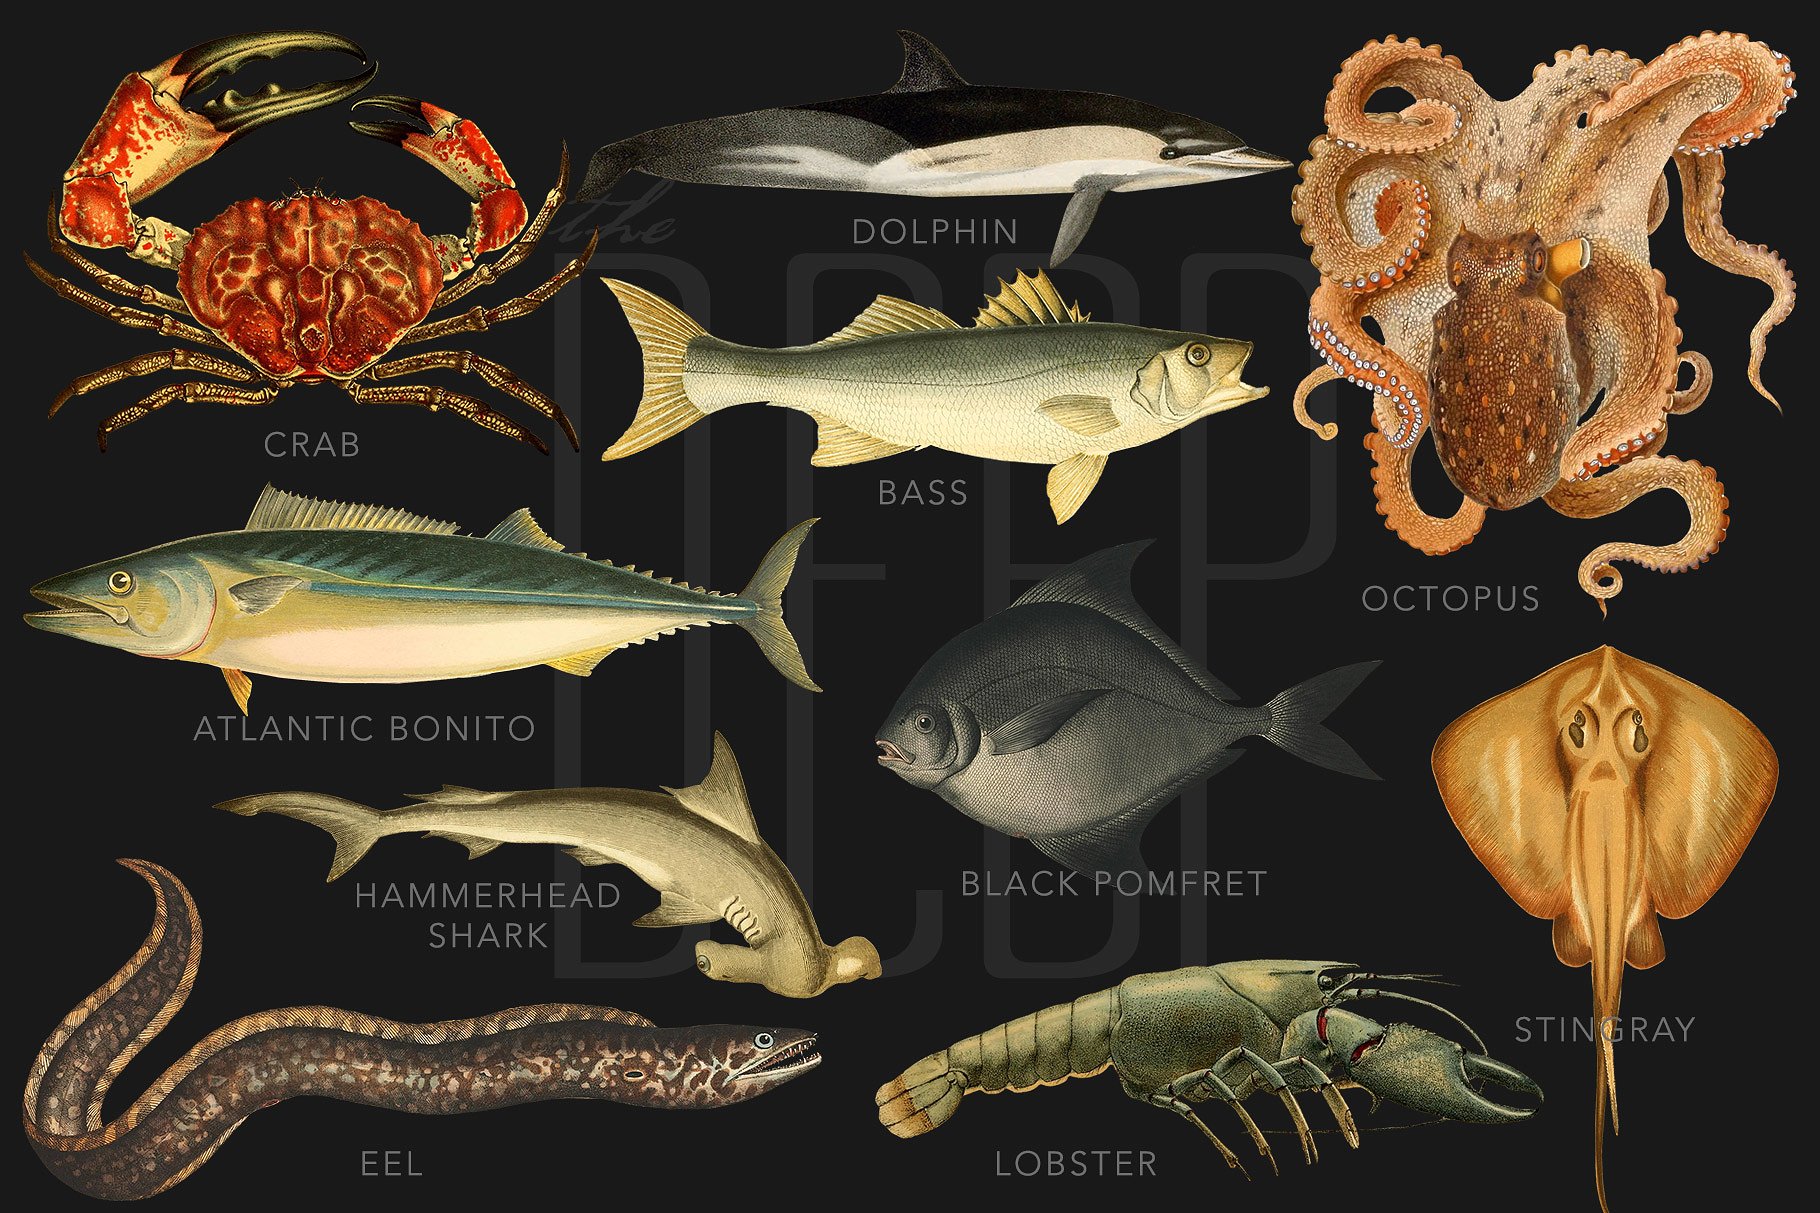 40年代复古深海类海洋生物科学插图 The Deep Sea Creature Illustrations插图(1)